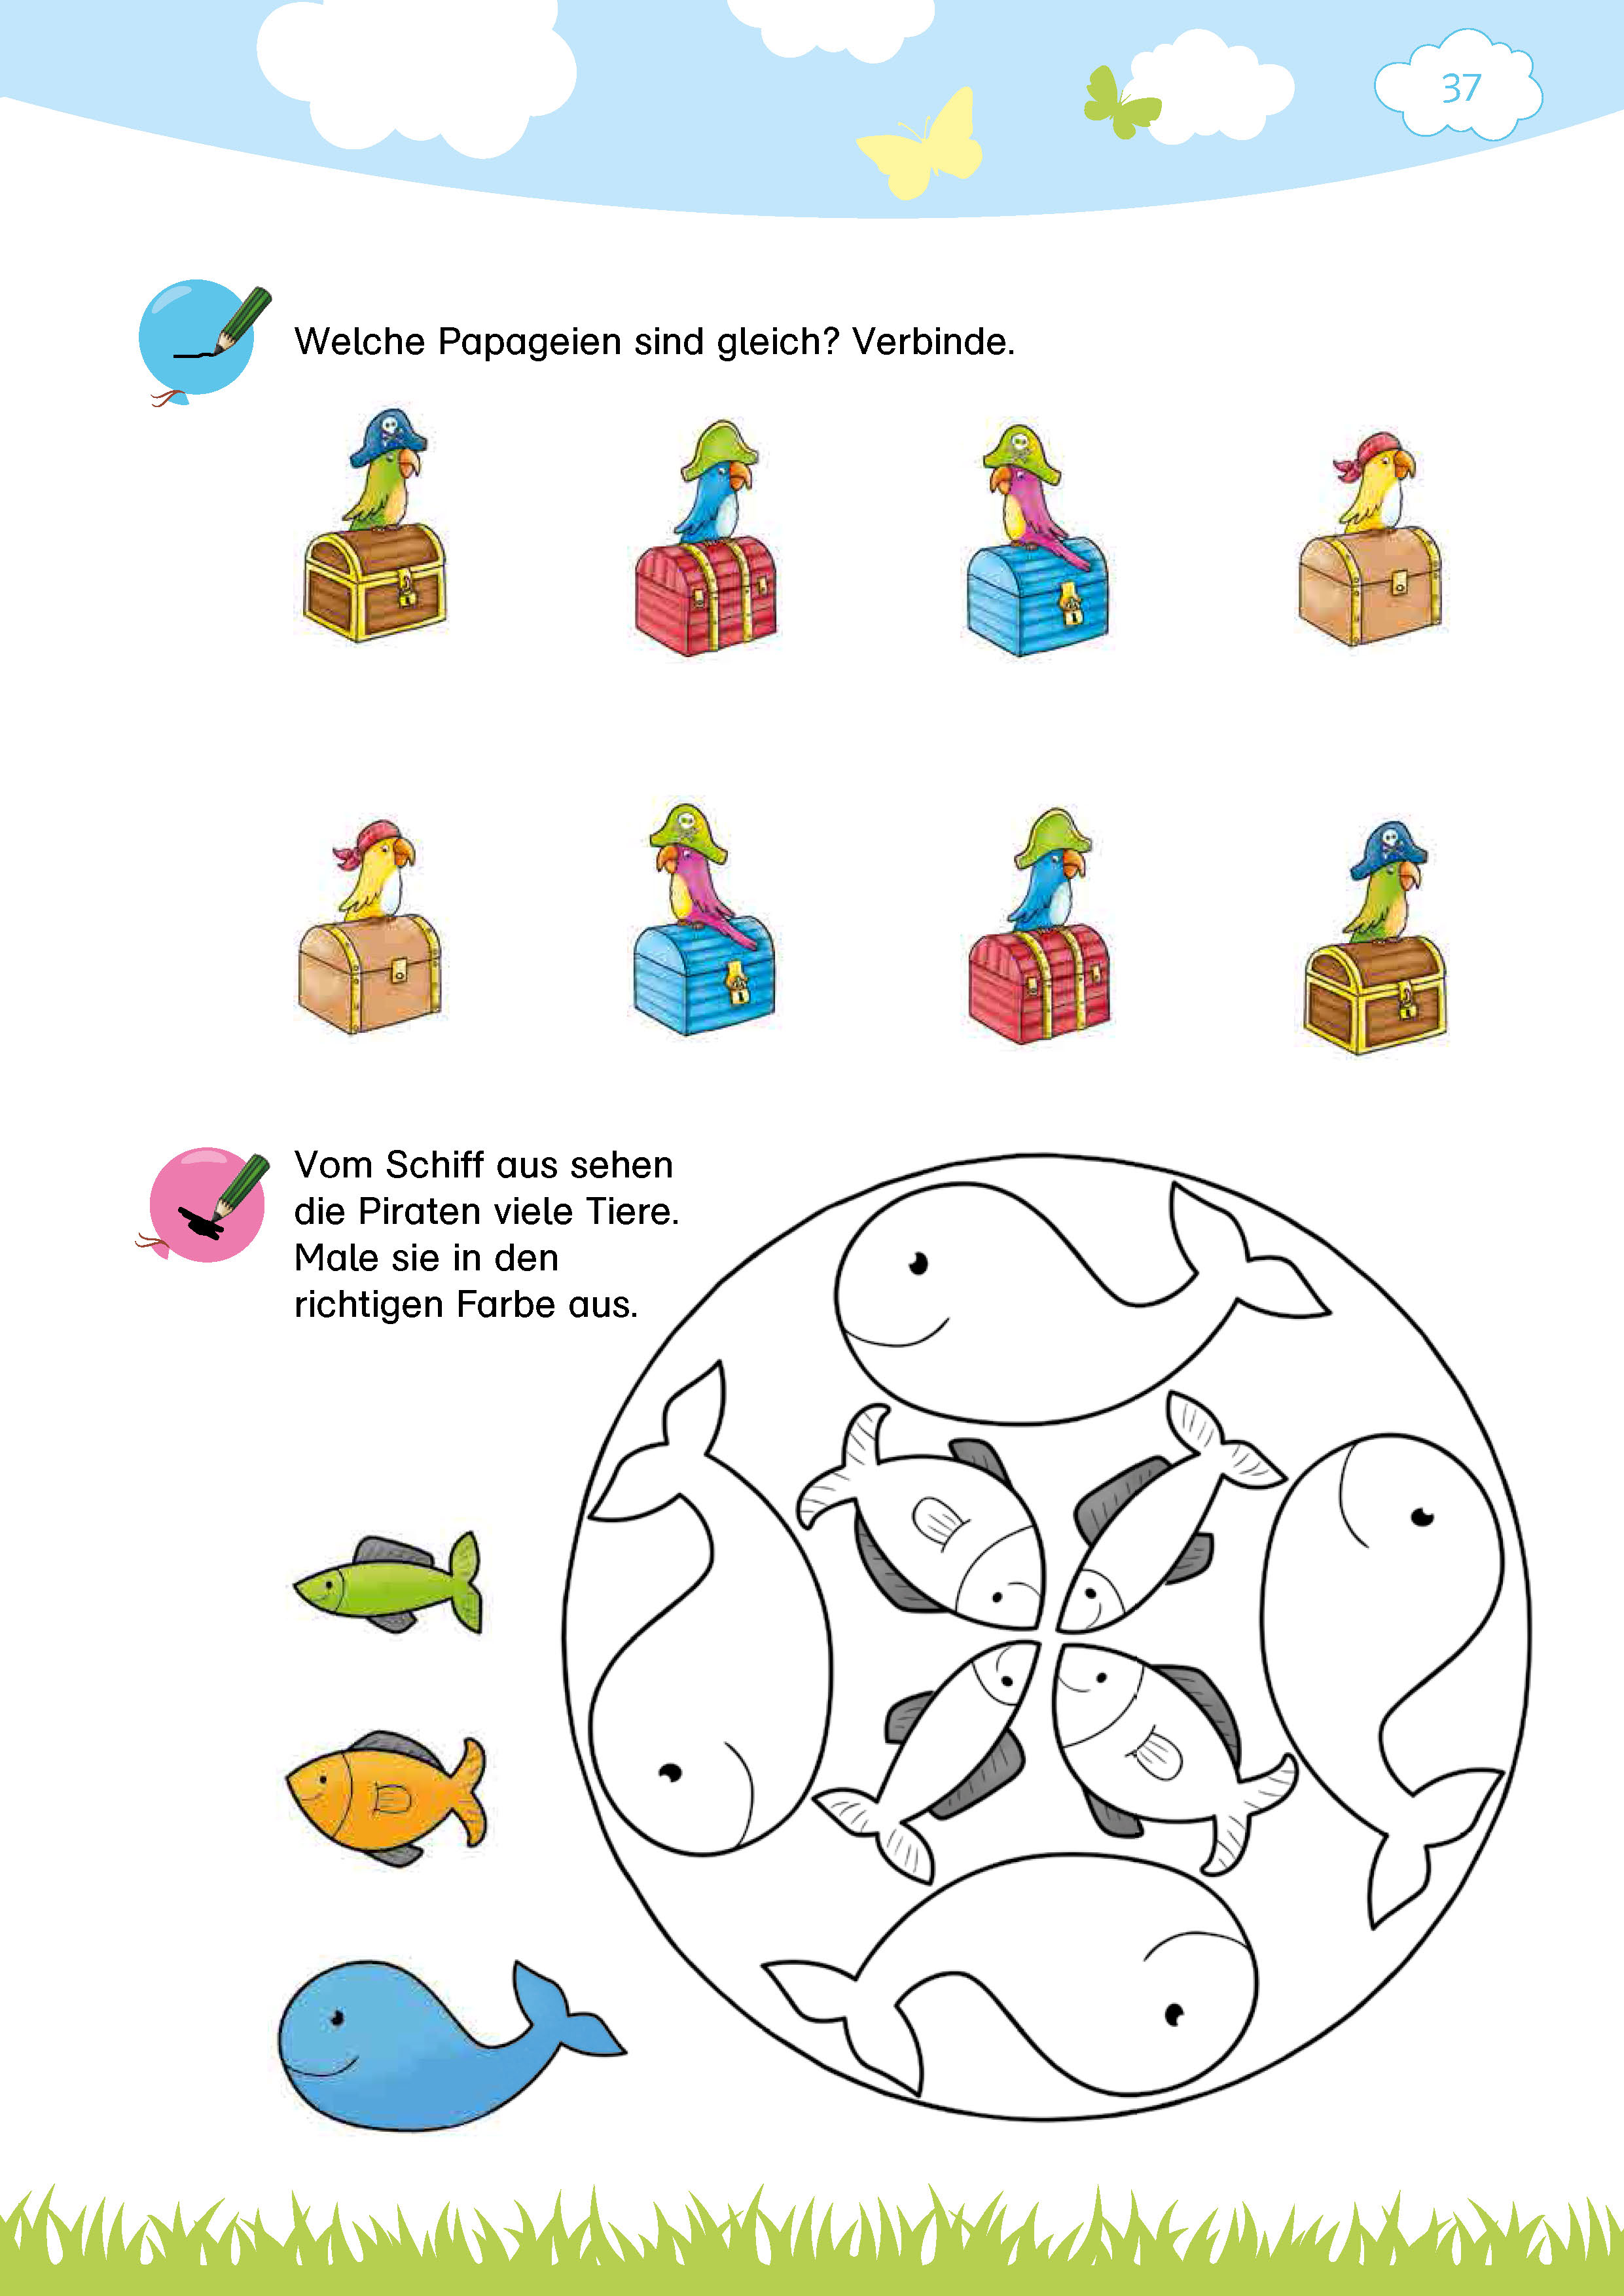 Klett Mein großes buntes Kindergarten-Buch